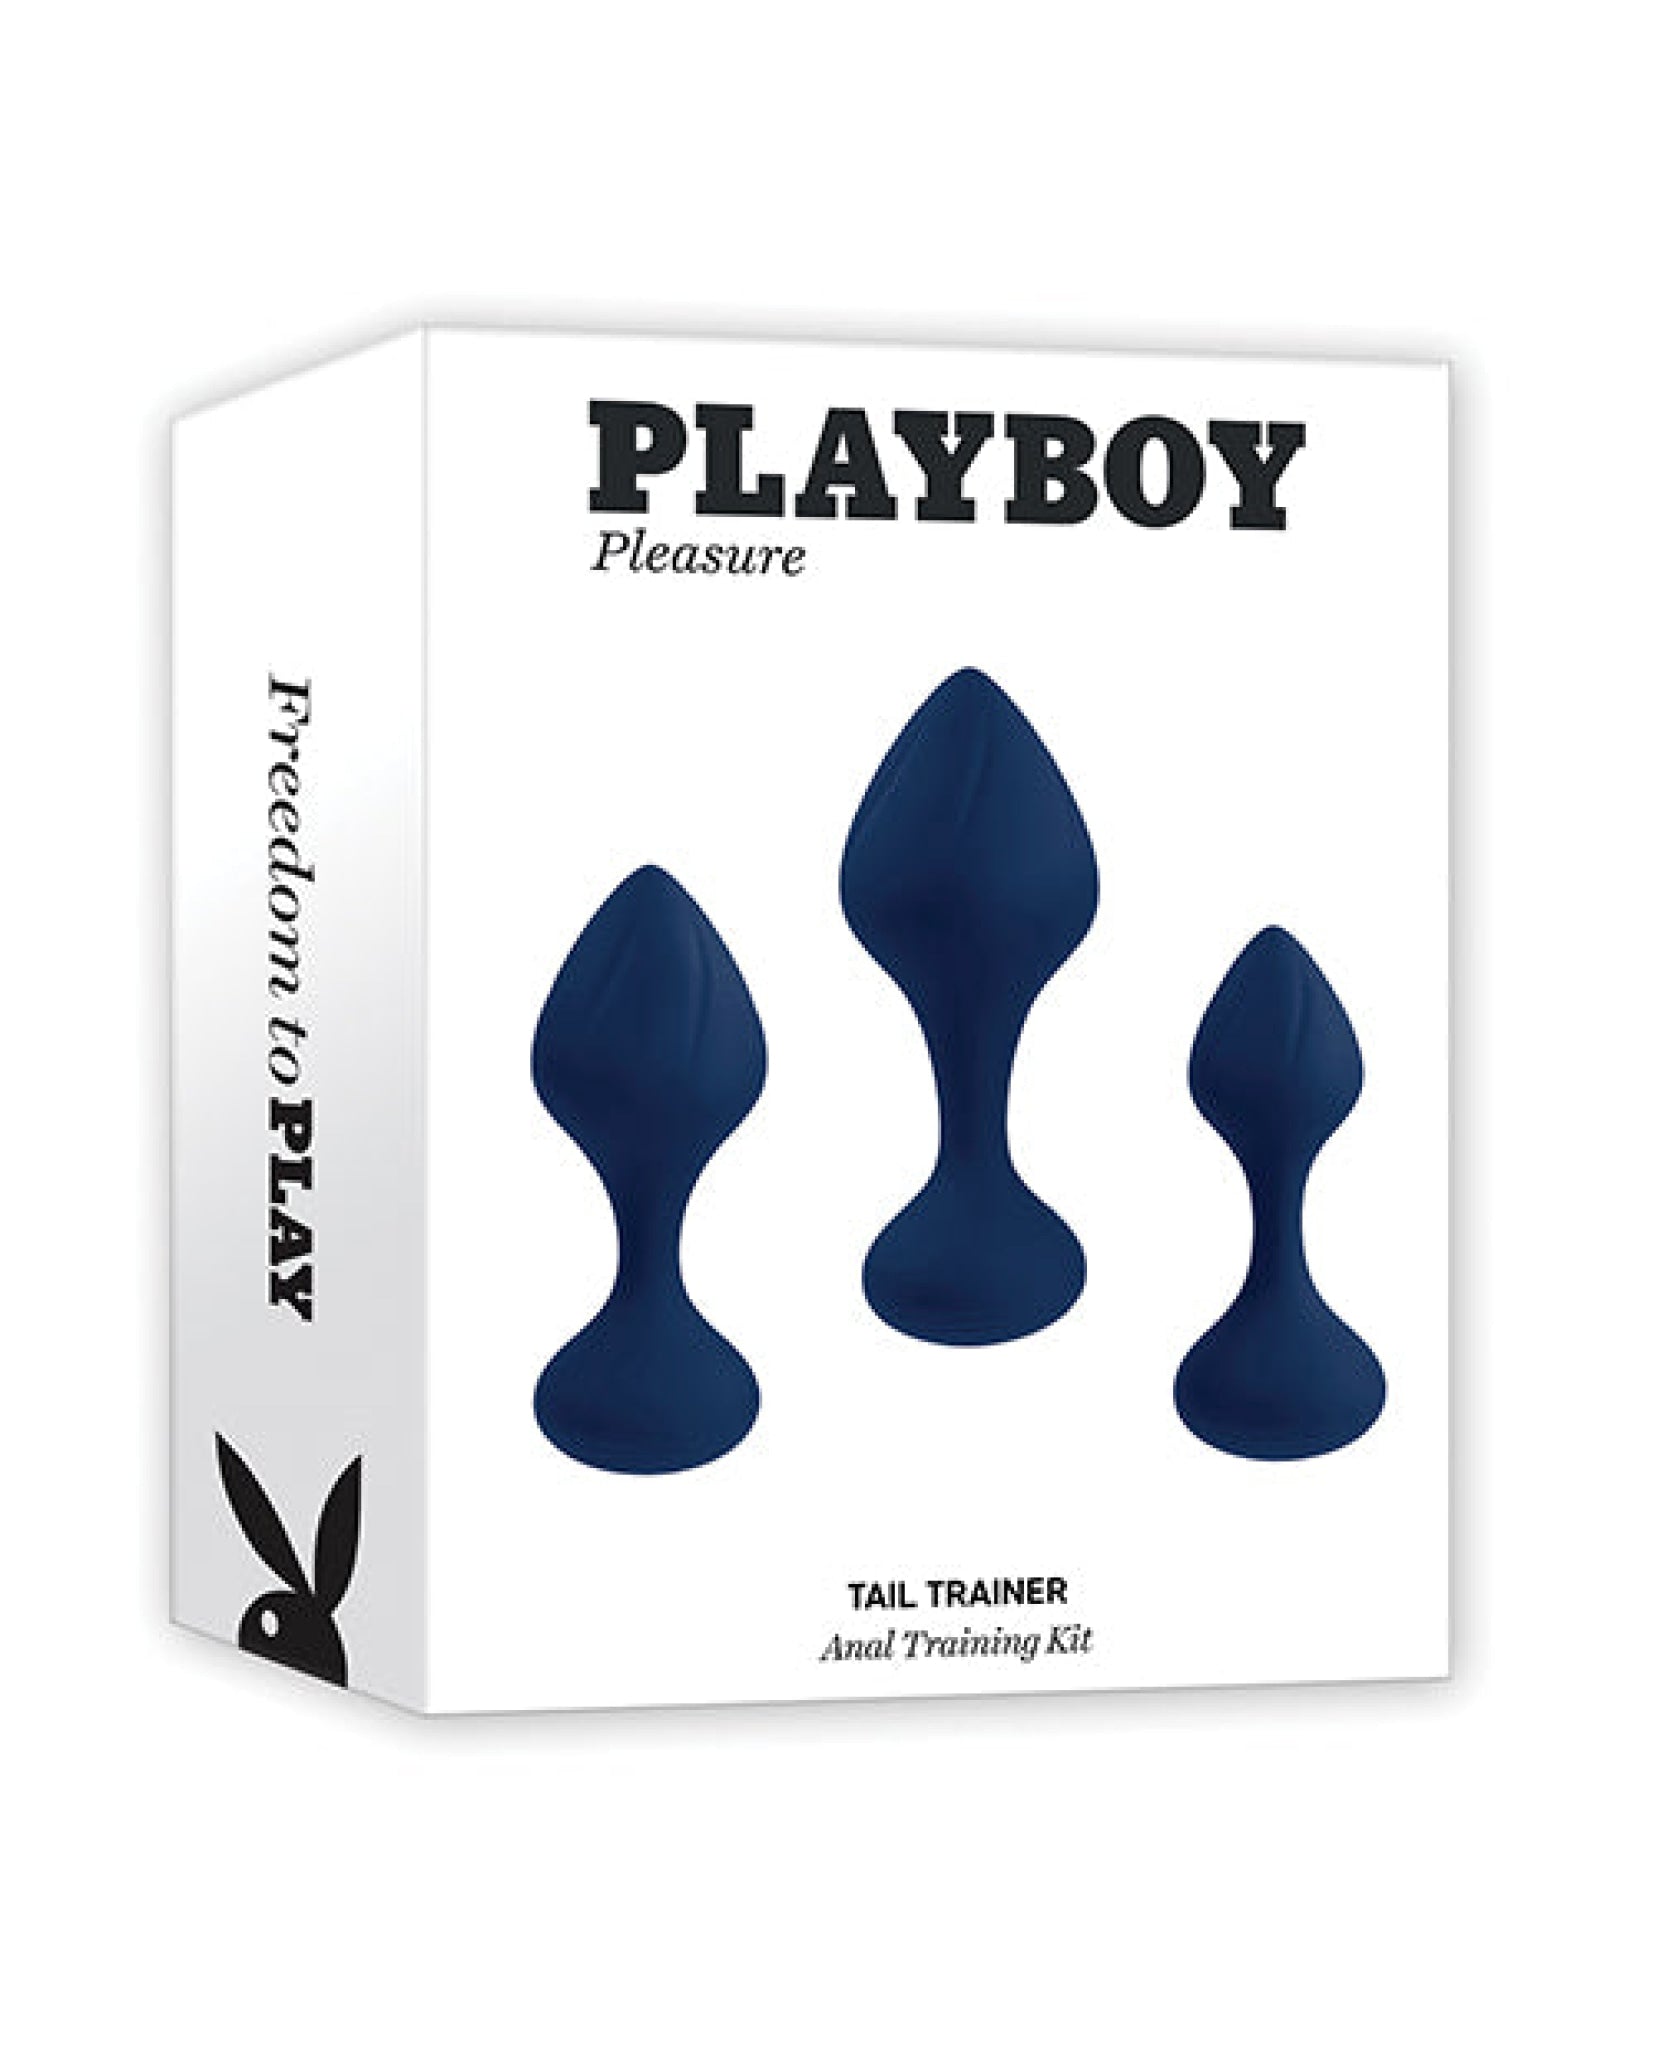 Playboy Pleasure Tail Trainer Anal Training Kit - Navy Playboy